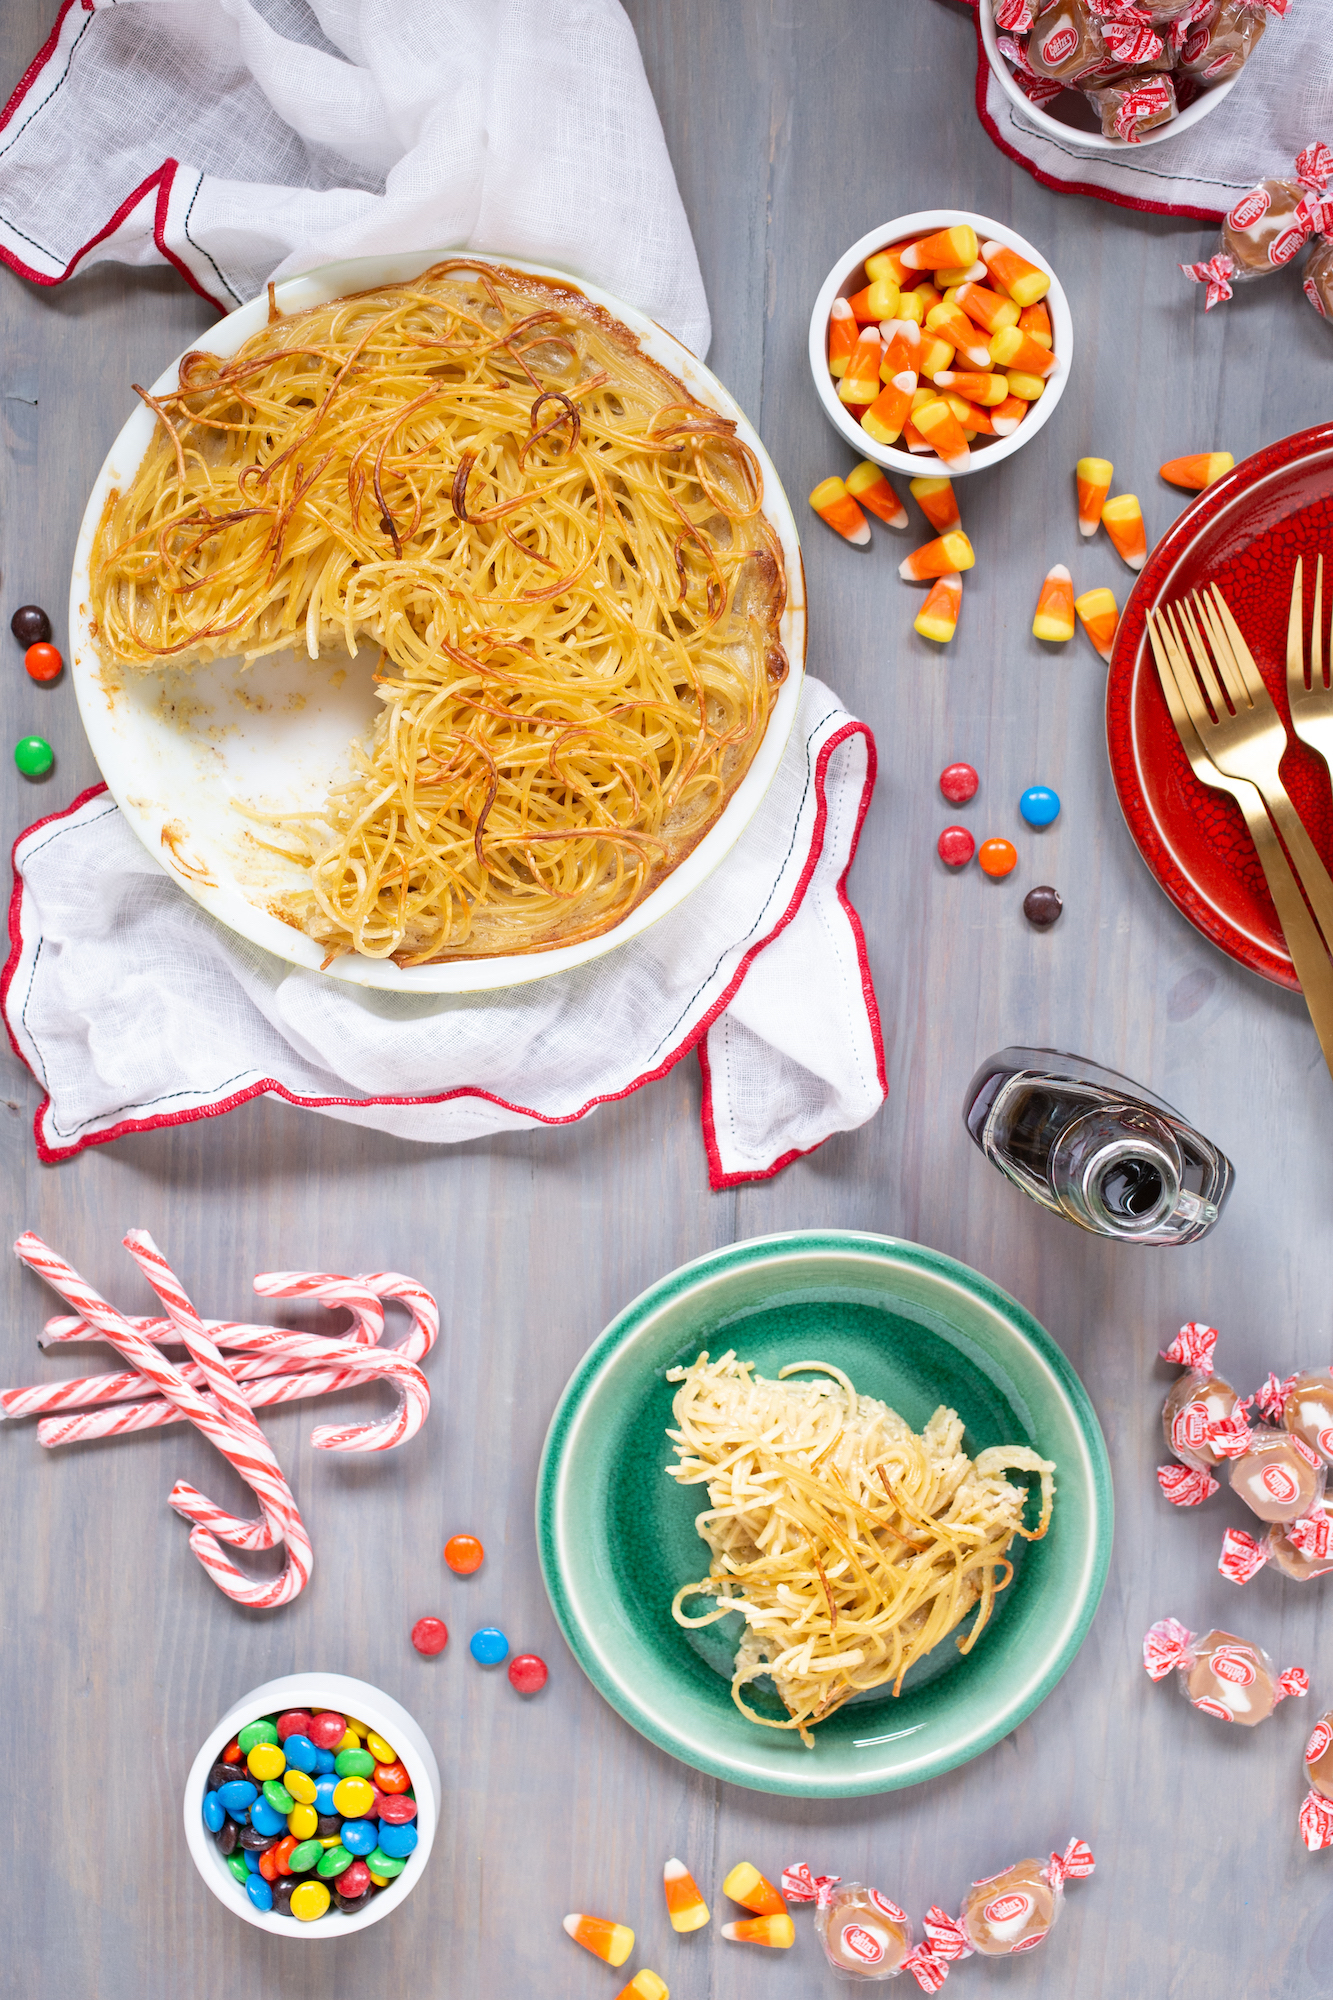 Buddy the Elf breakfast and candy spaghetti pie